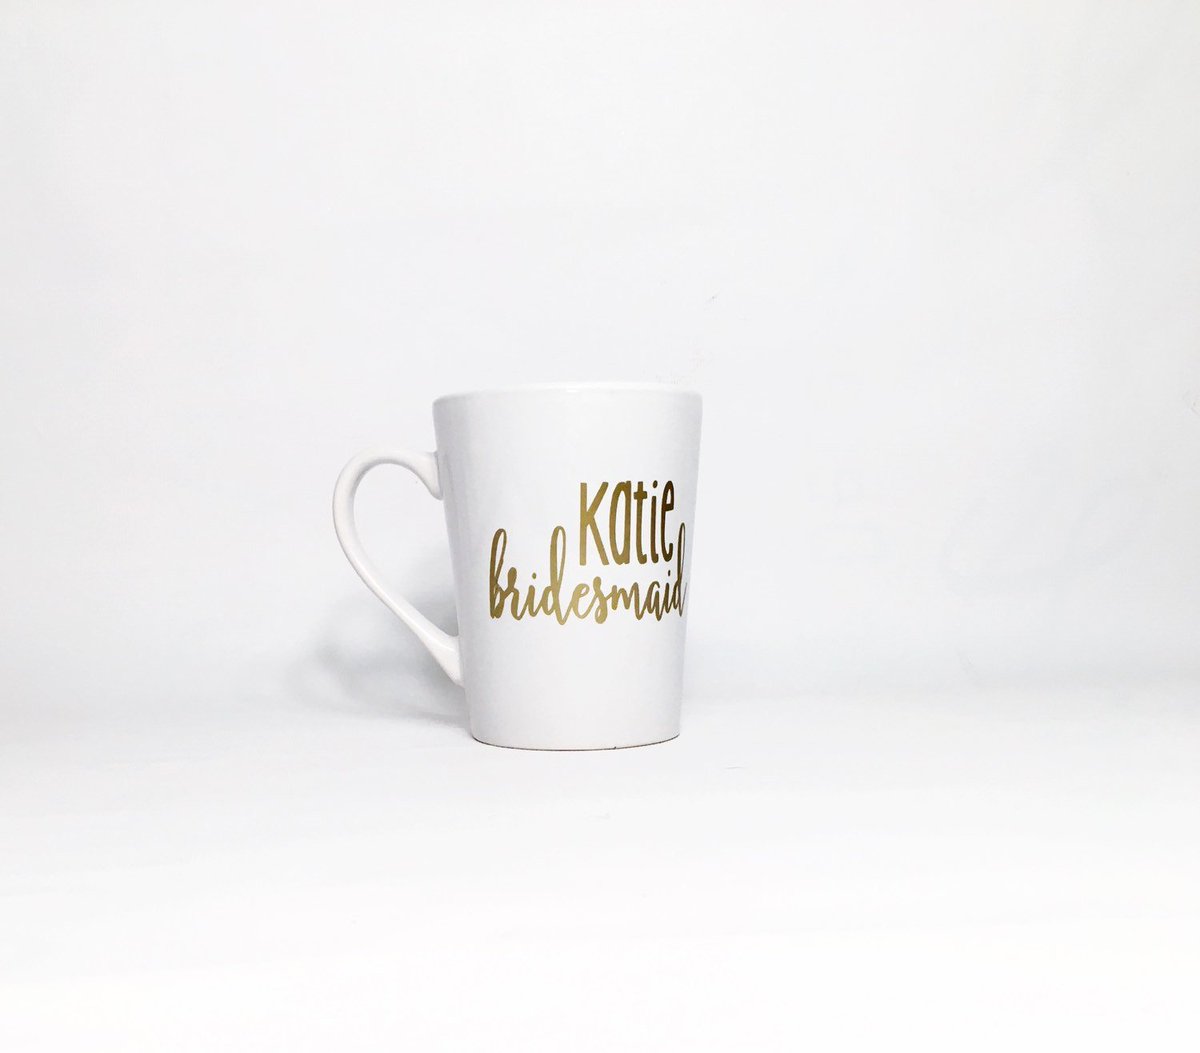 Bridesmaid Mug - Bridesmaid Proposal Gift - Personalized Bridesm… etsy.me/1Q9yZ88 #wedding #PersonalizedCups